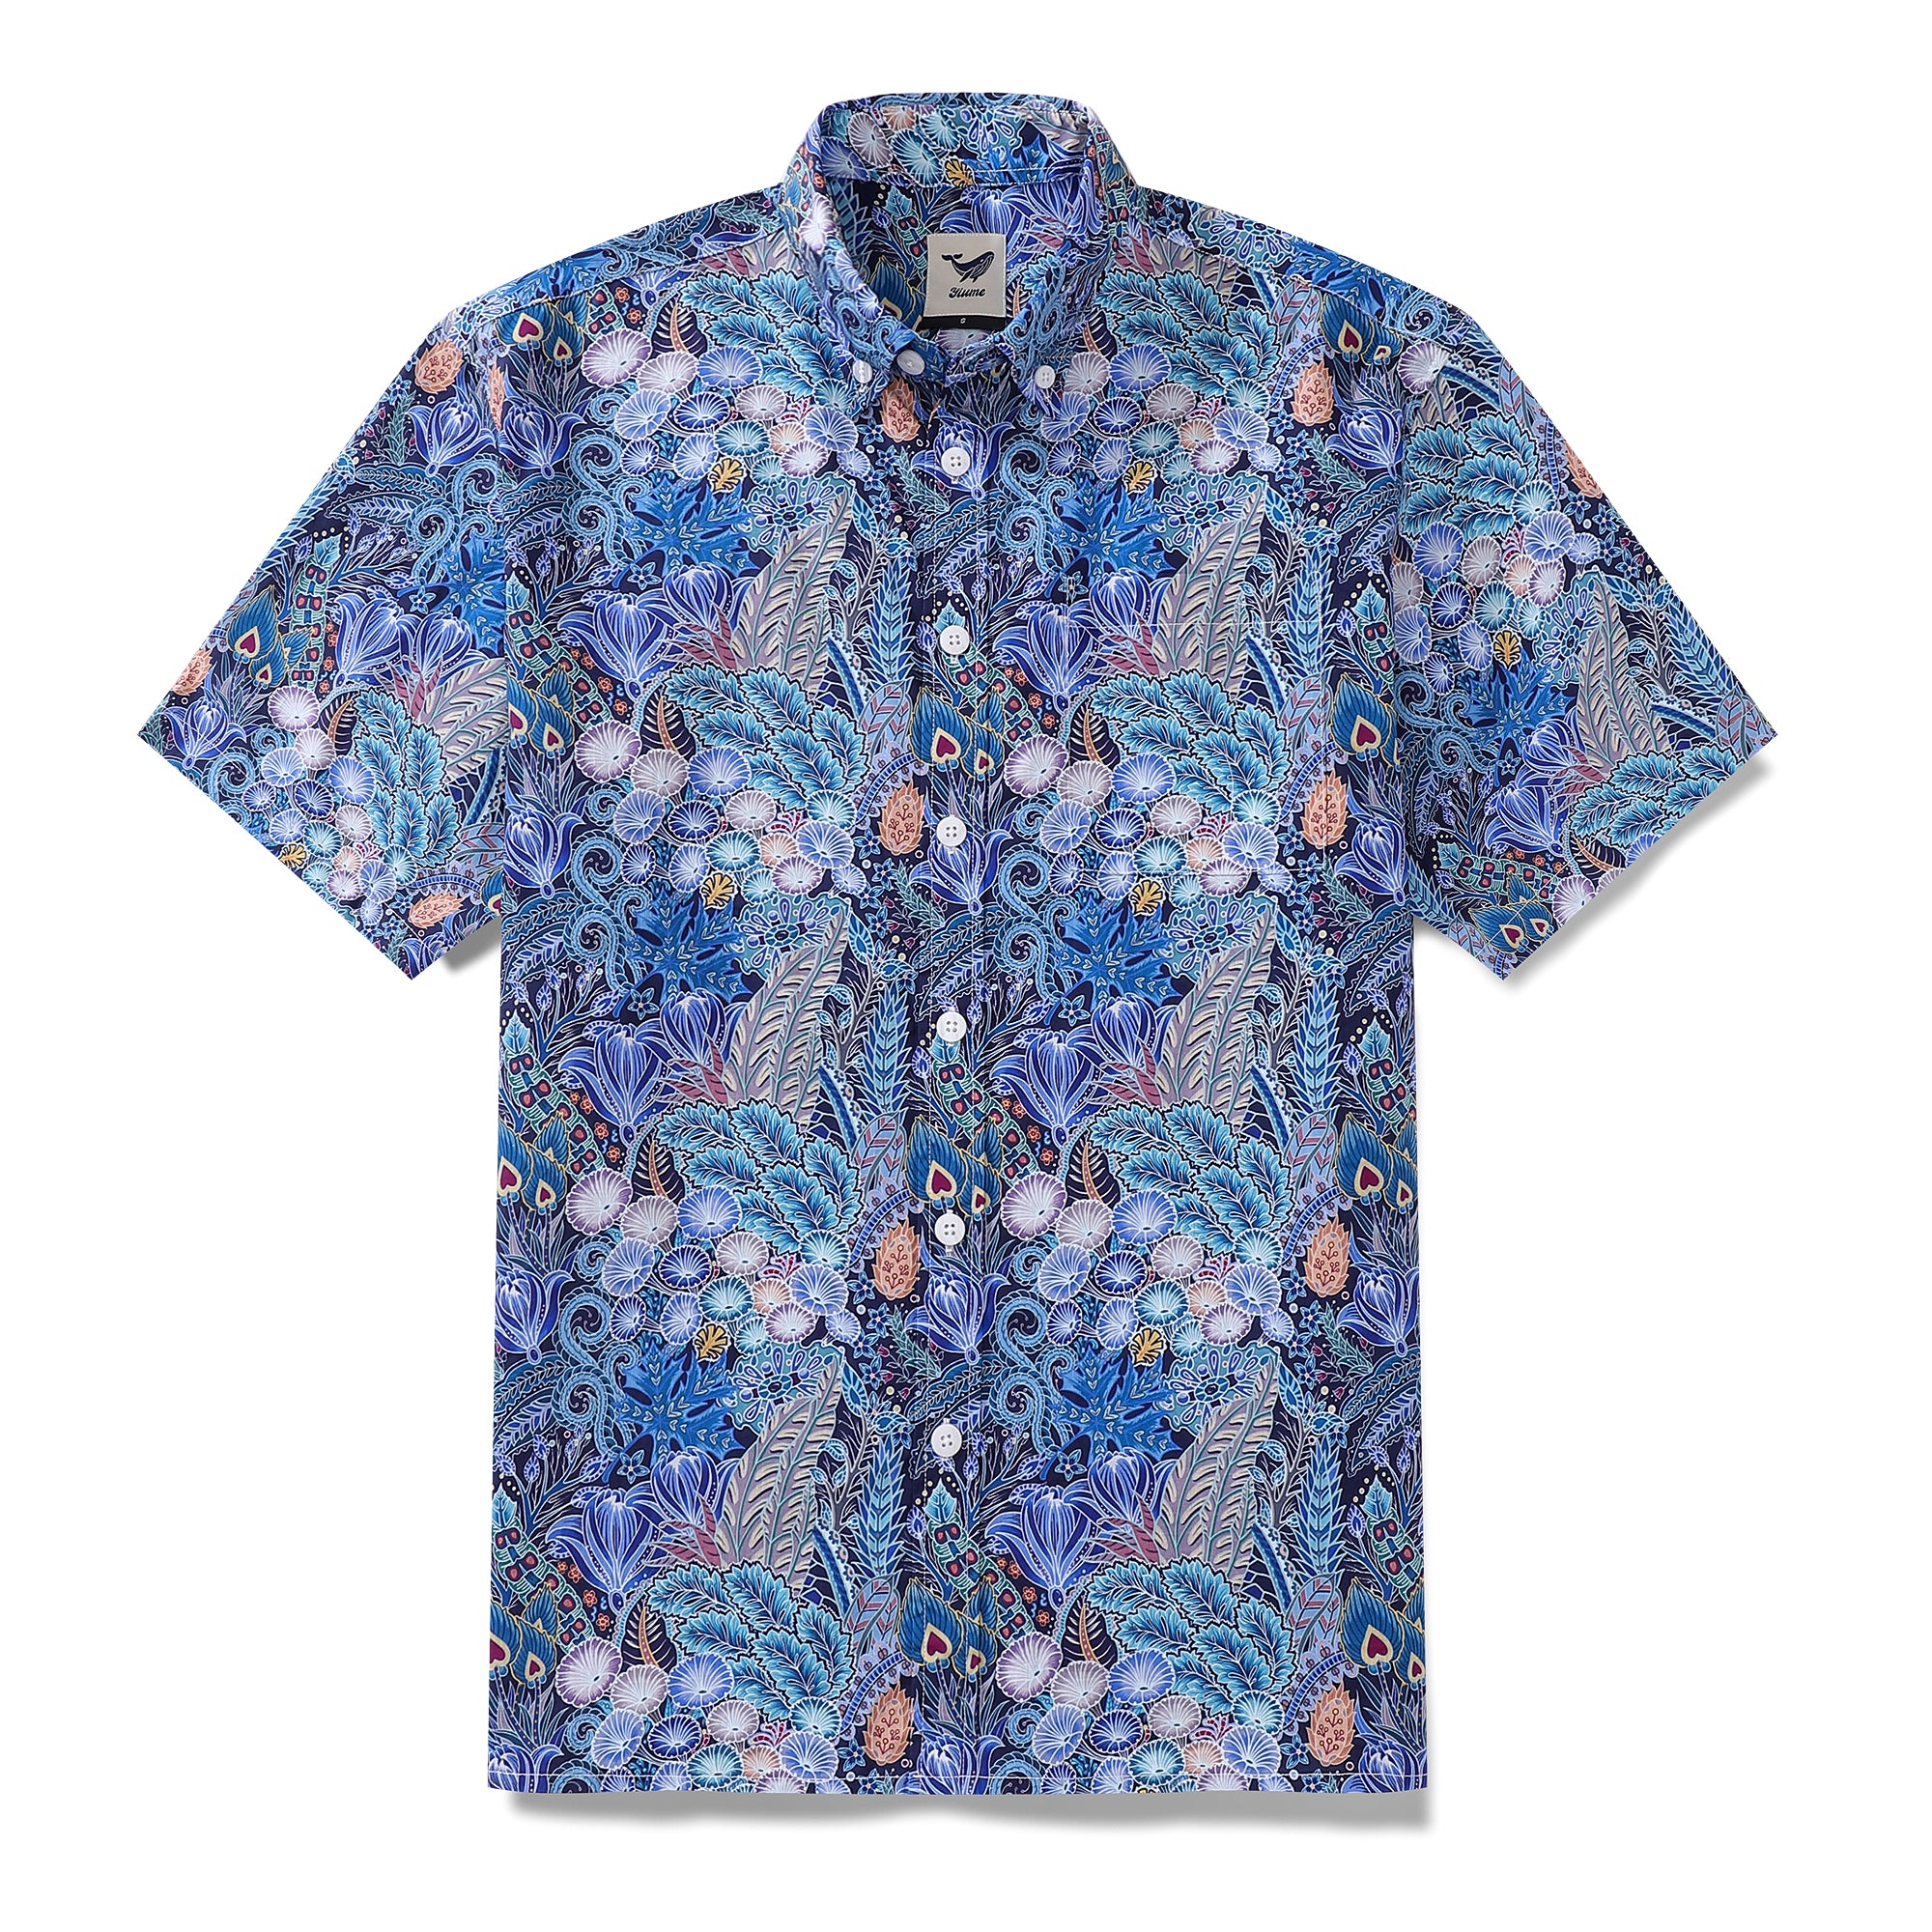 Herren-Hawaii-Hemd mit Blumenmuster, Serie 2, bedrucktes Baumwoll-Button-Down-Kurzarm-Aloha-Hemd